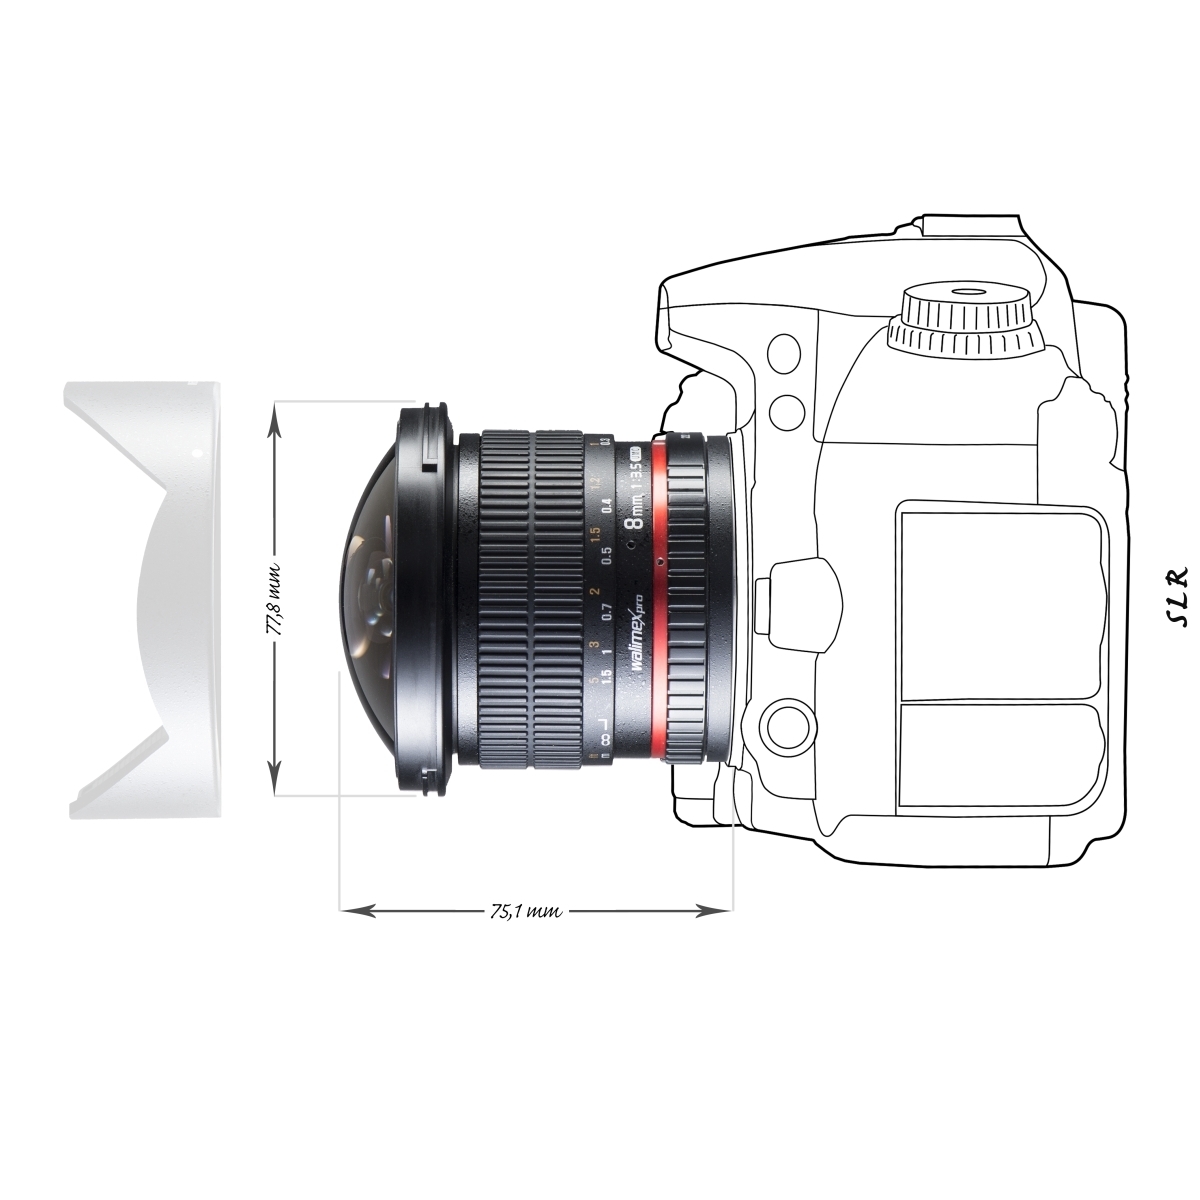 Fish-Eye walimex pro 8/3,5 pour Canon EF-S